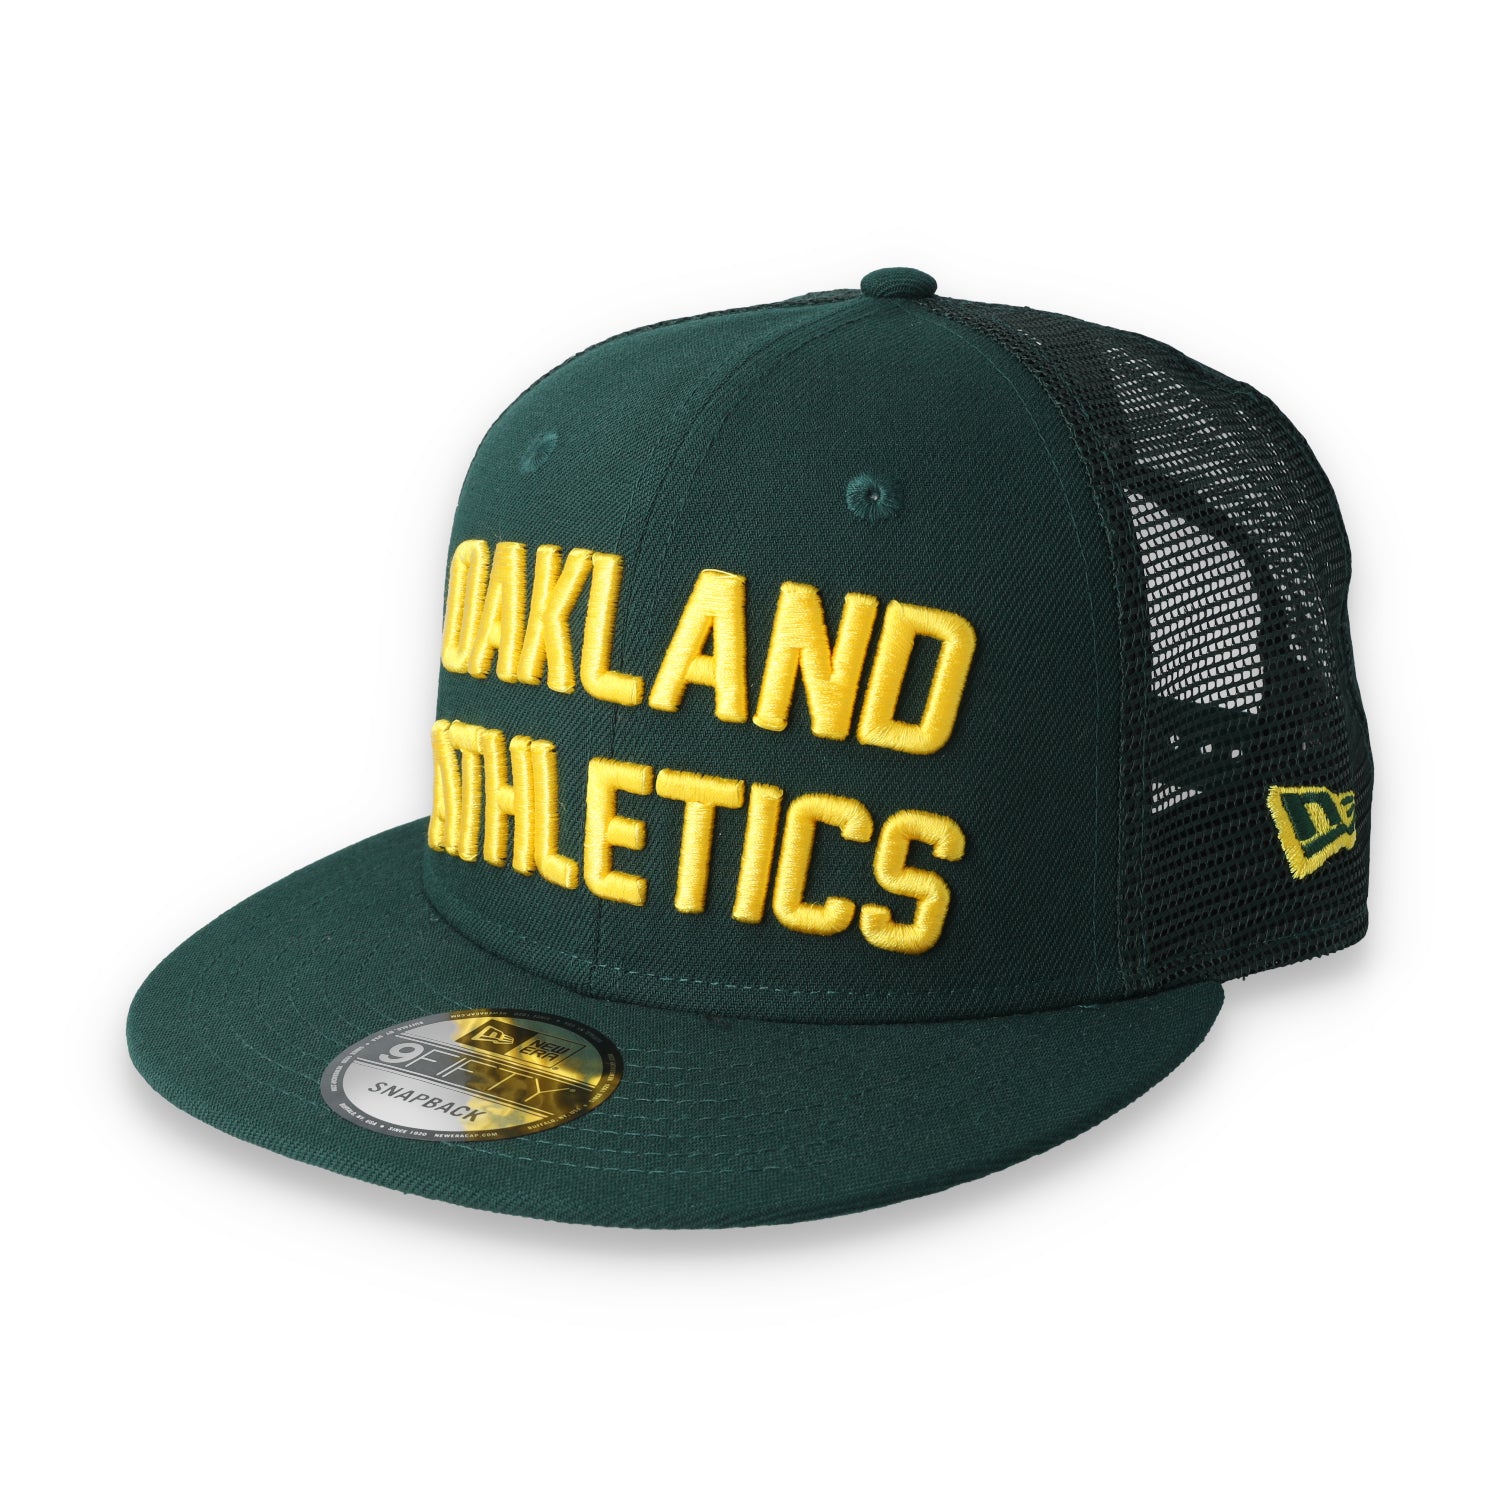 New Era Oakland Athletics Script 9FIFTY Trucker Snapback Hat